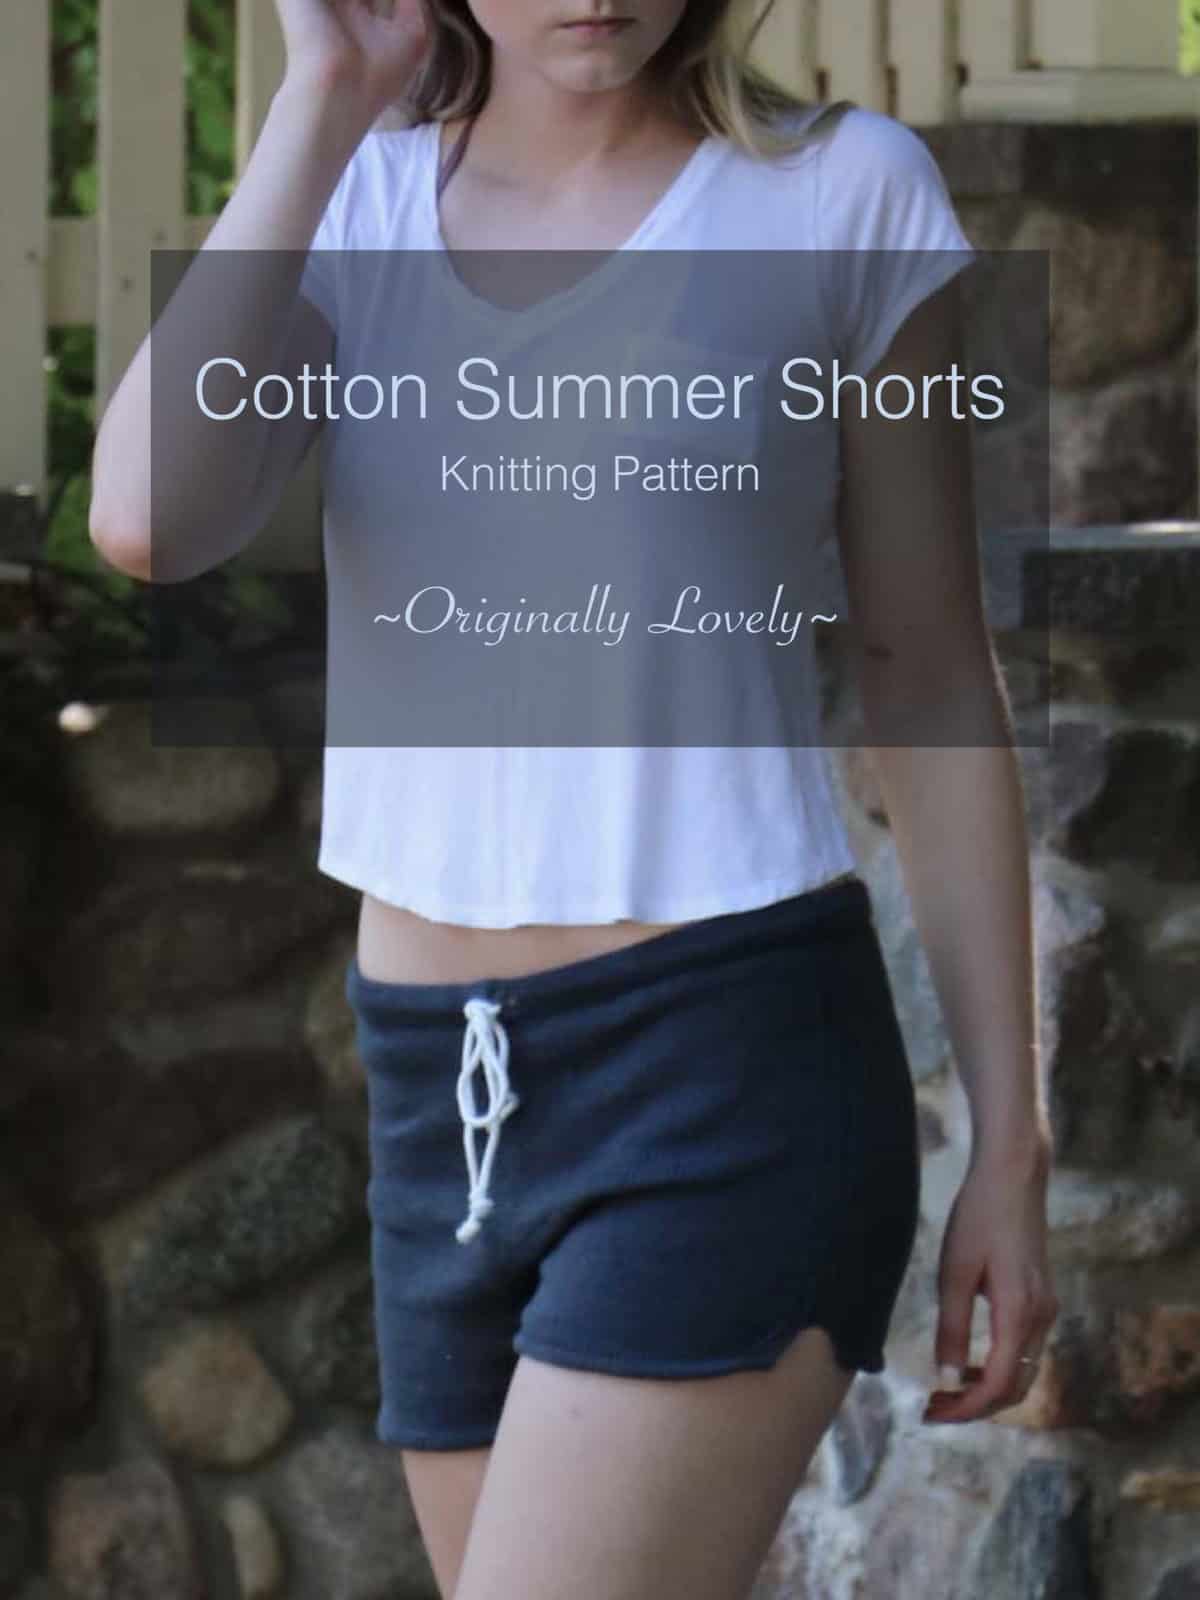 Cotton Summer Shorts Knitting Pattern - Originally Lovely